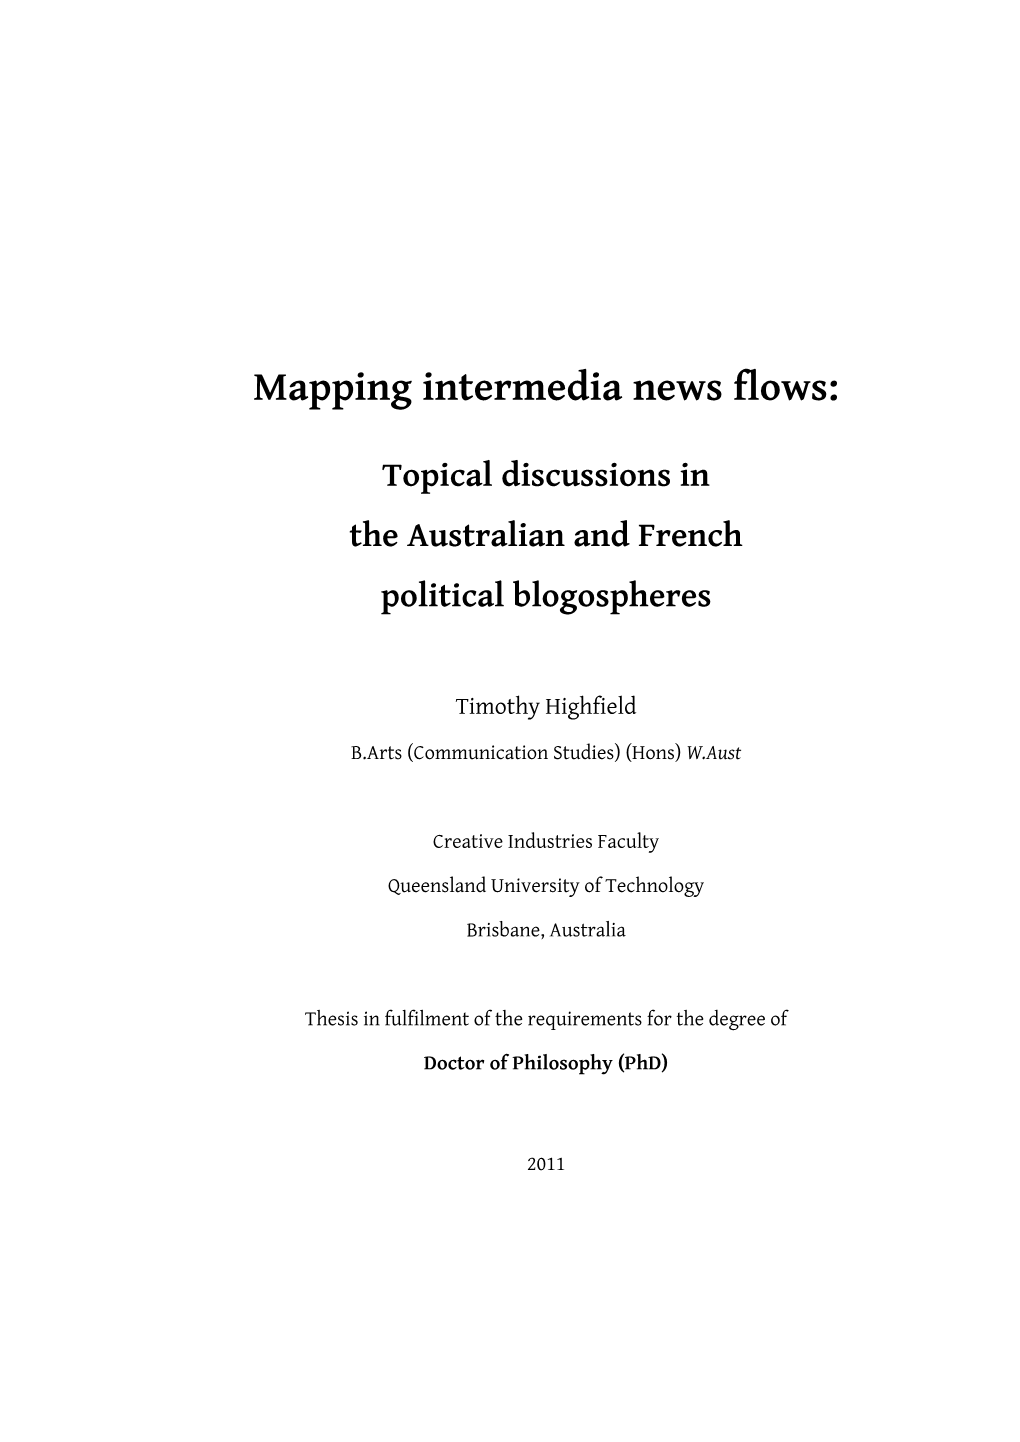 Mapping Intermedia News Flows